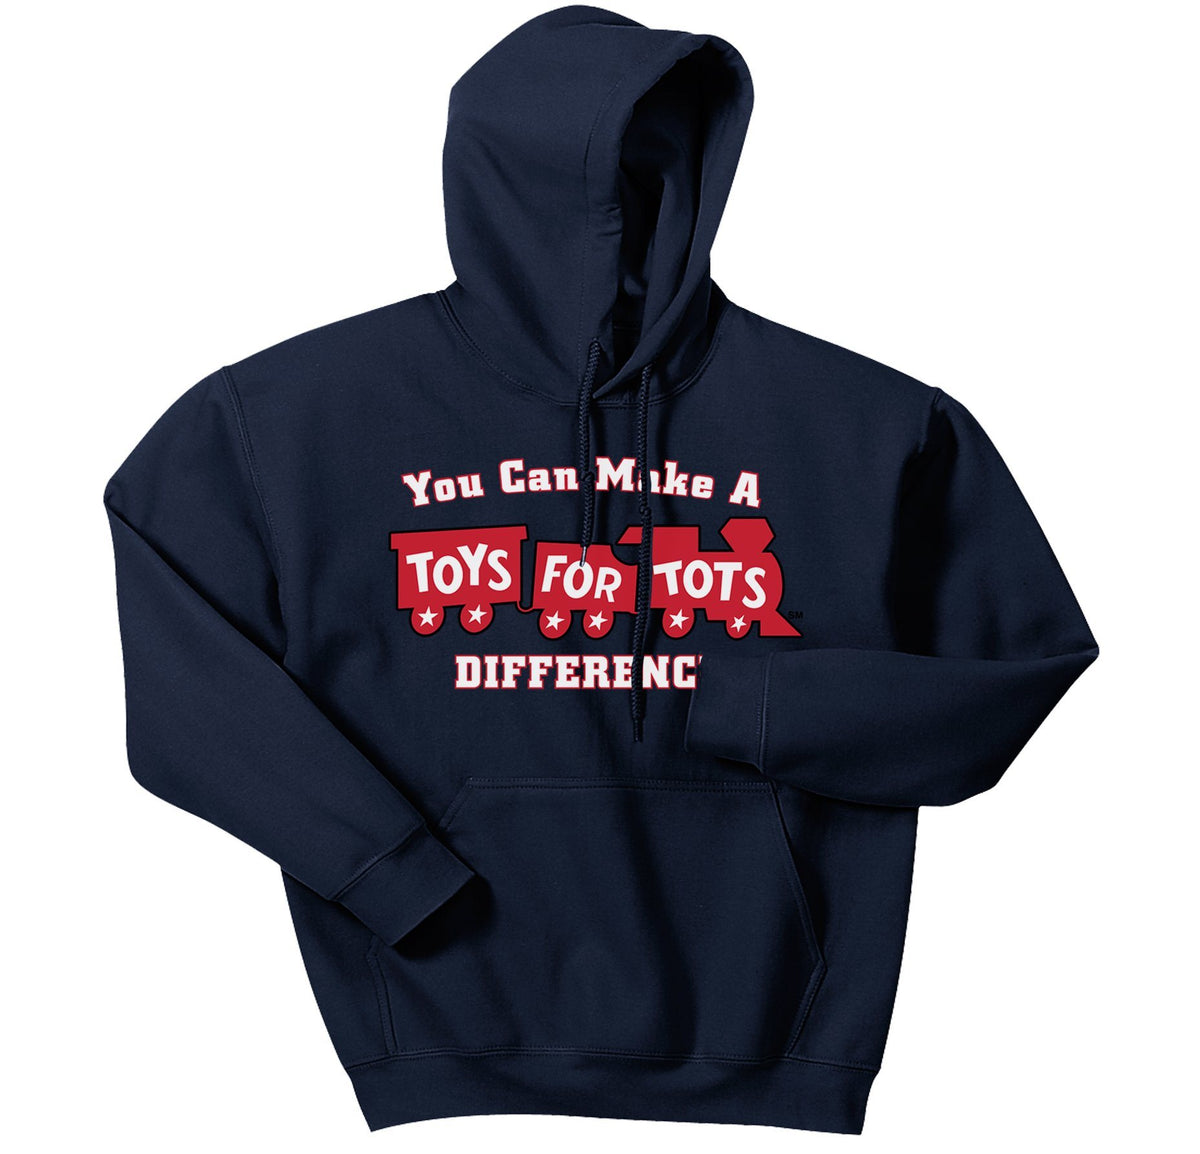 Make a Difference TFT Train Kids Hoodie TFT Sweatshirt/hoodie marinecorpsdirecttft S NAVY 